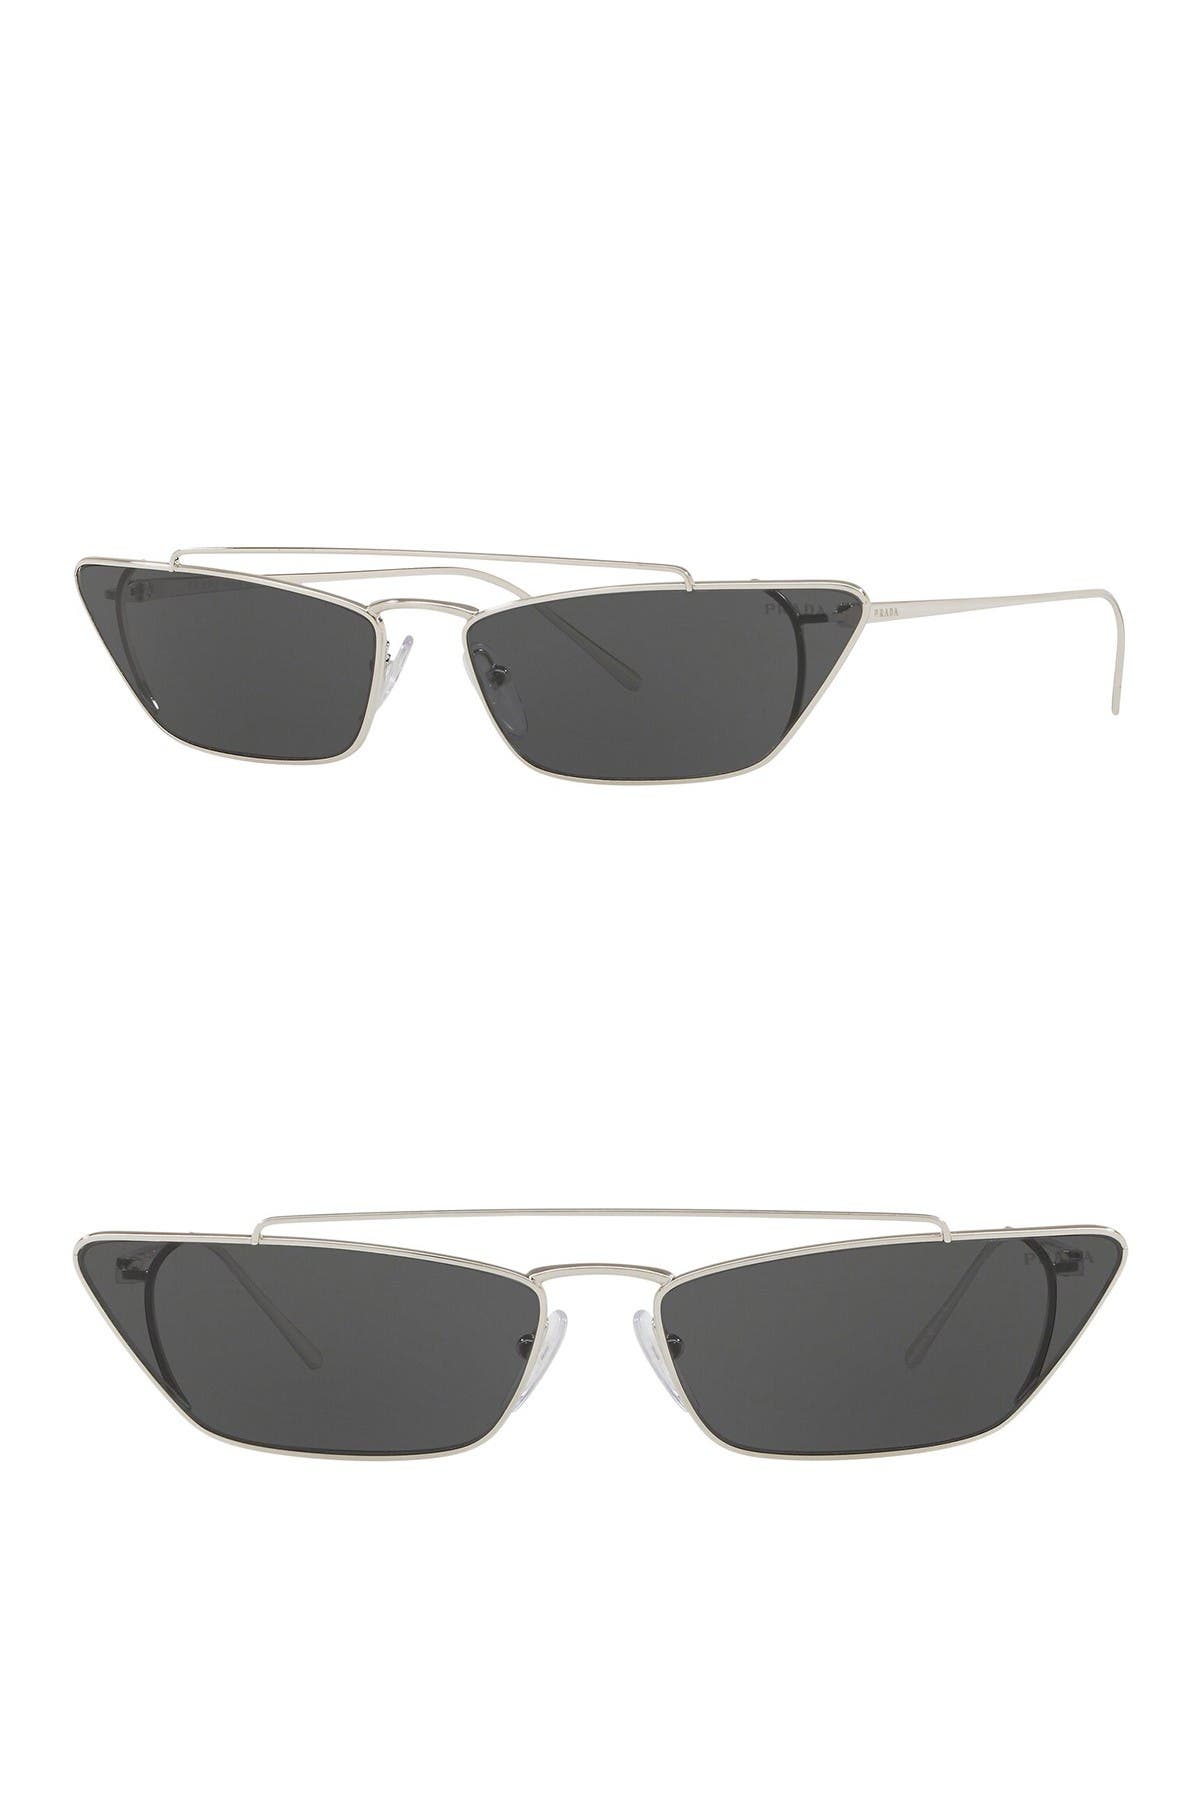 prada cateye sunglasses